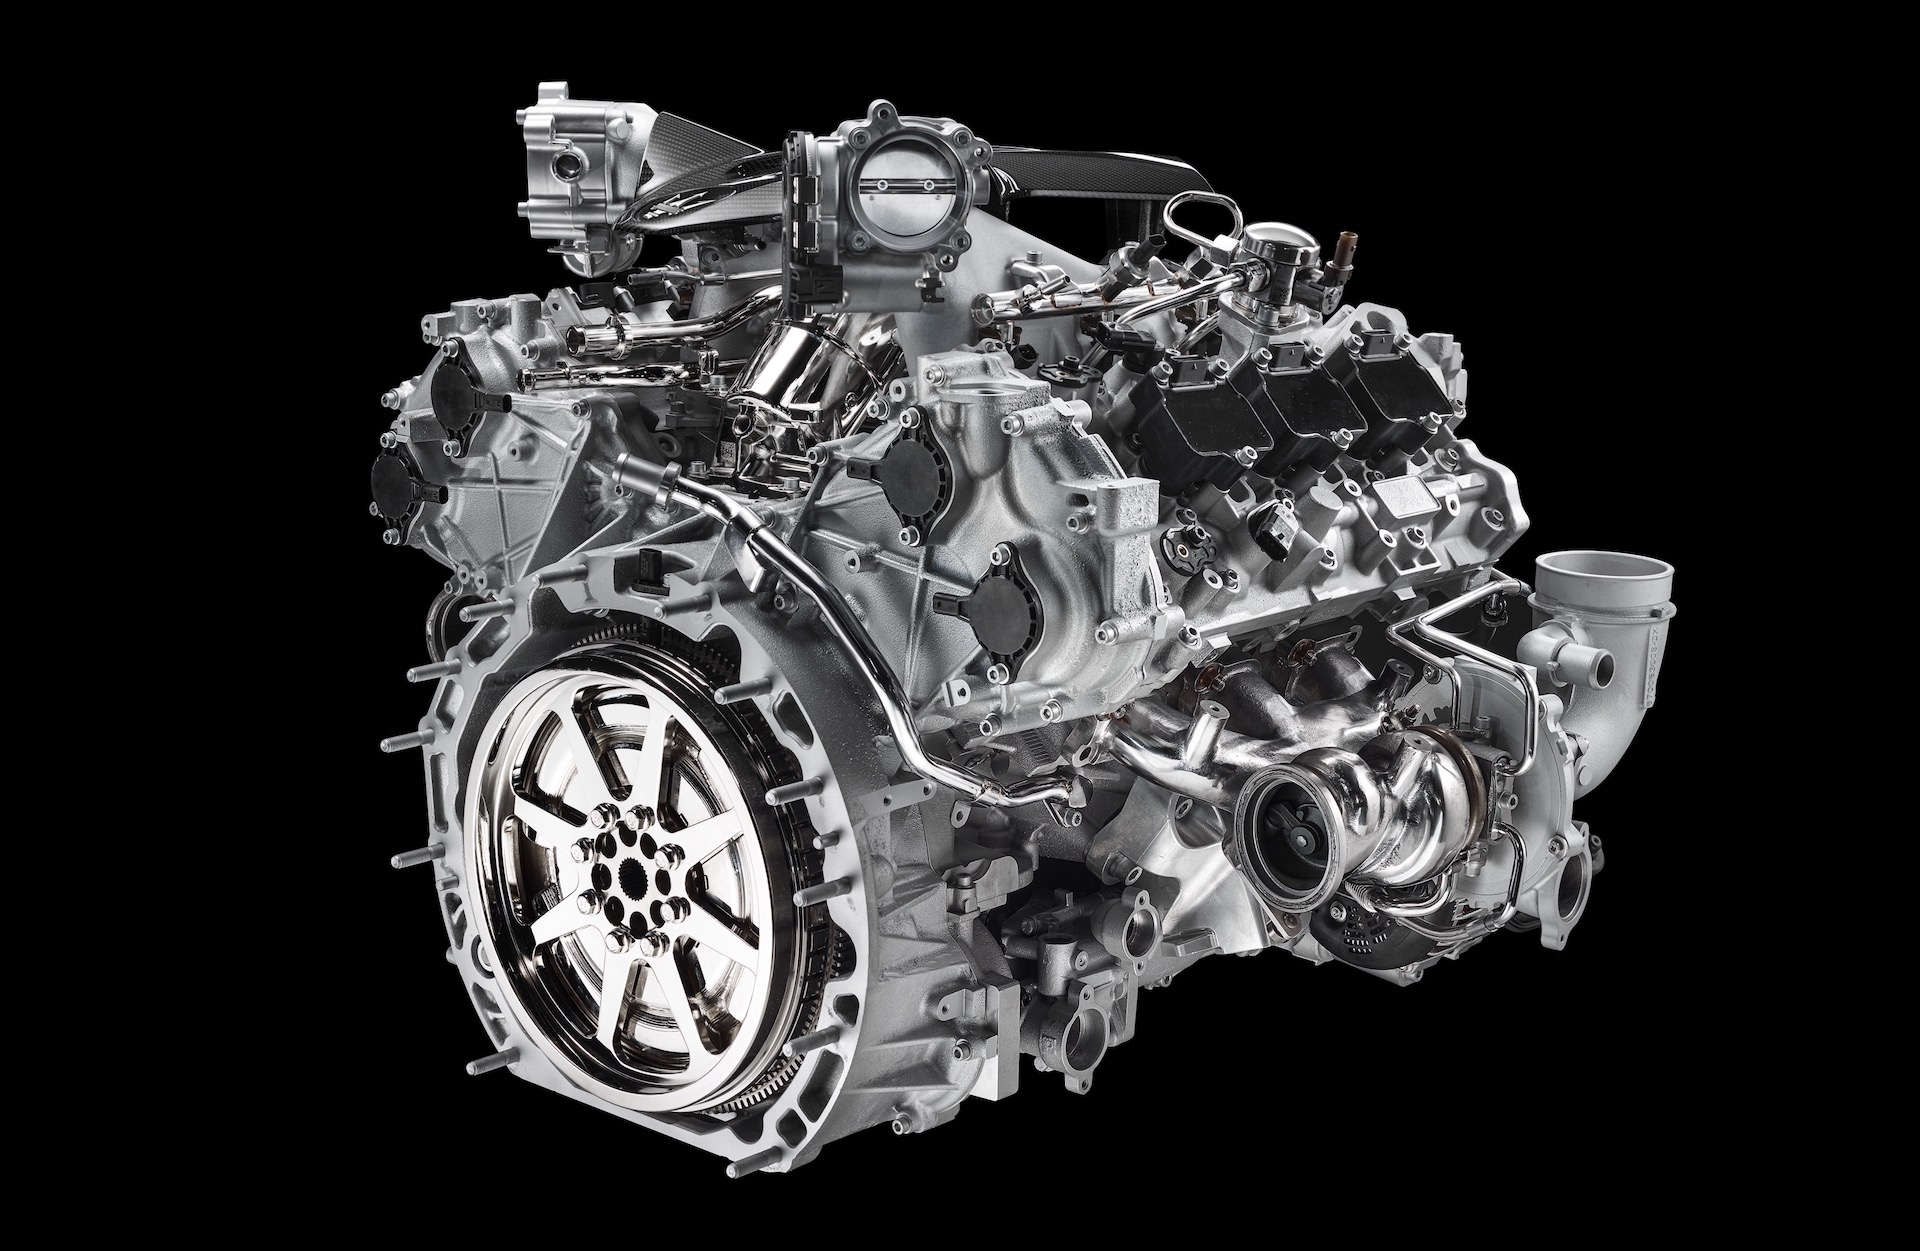 Maserati shows its all-new ‘Nettuno’ twin-turbo V6 engine